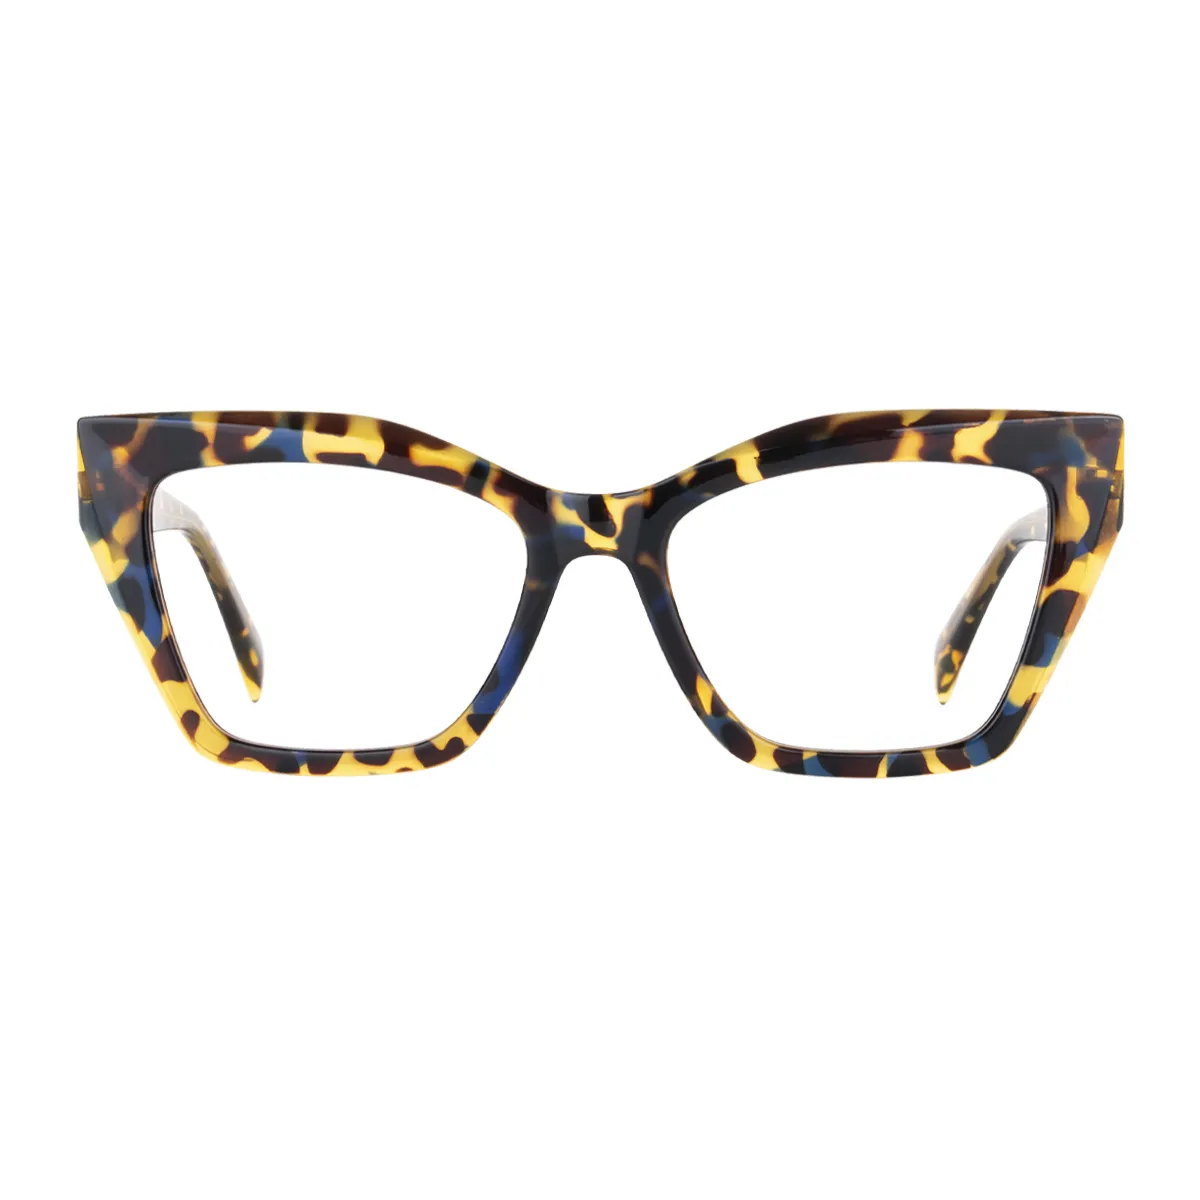 Panthera - Cat-Eye Tortoiseshell Glasses for Women